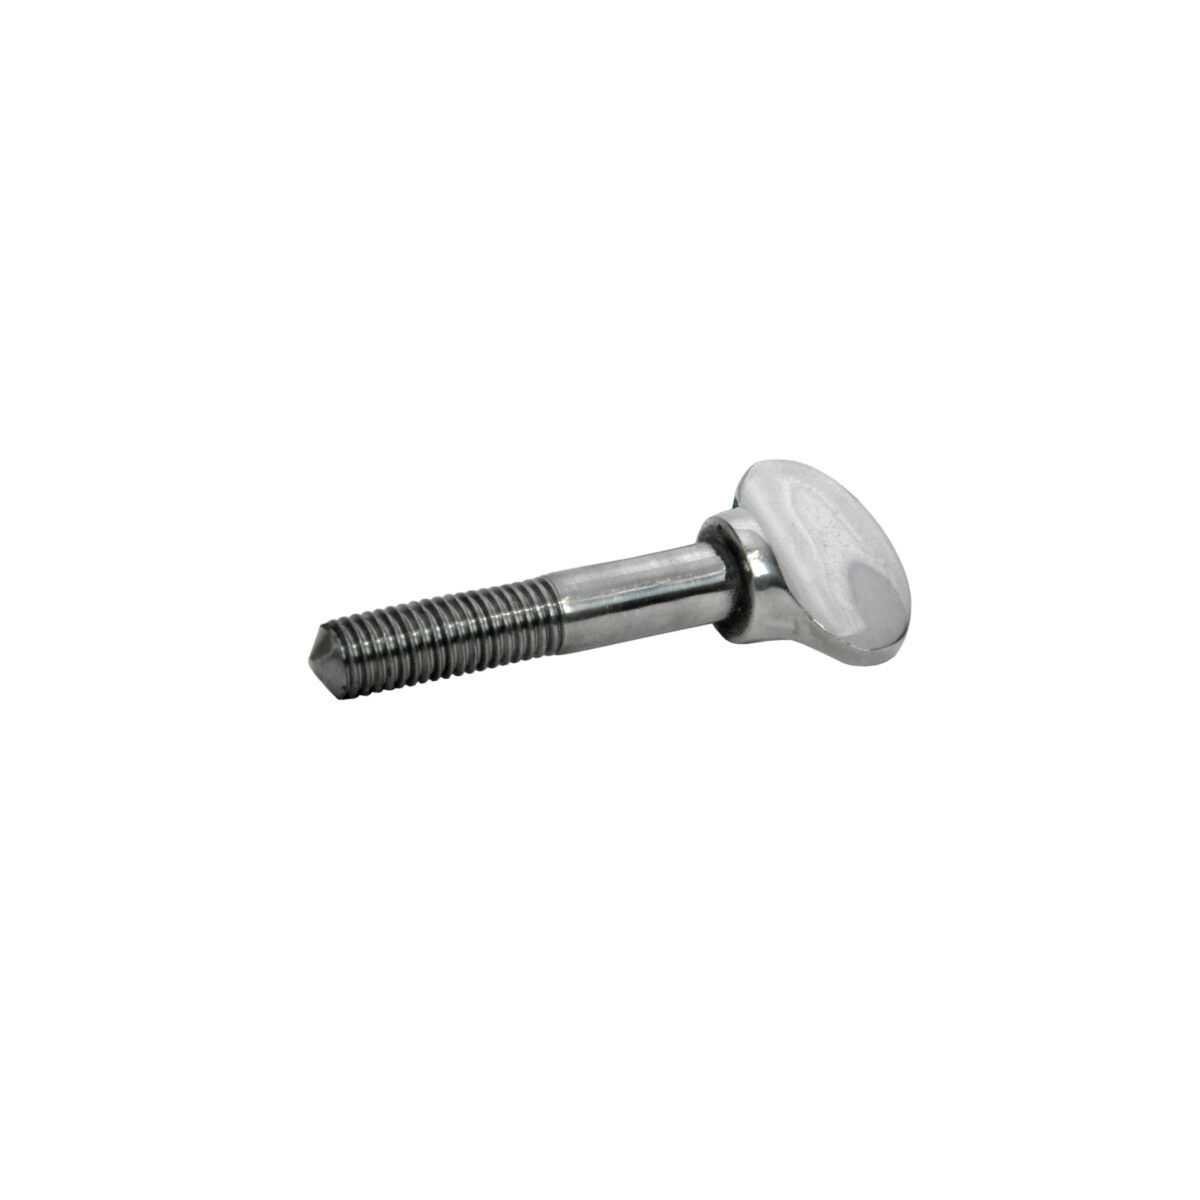 KWS grinder thumb screw